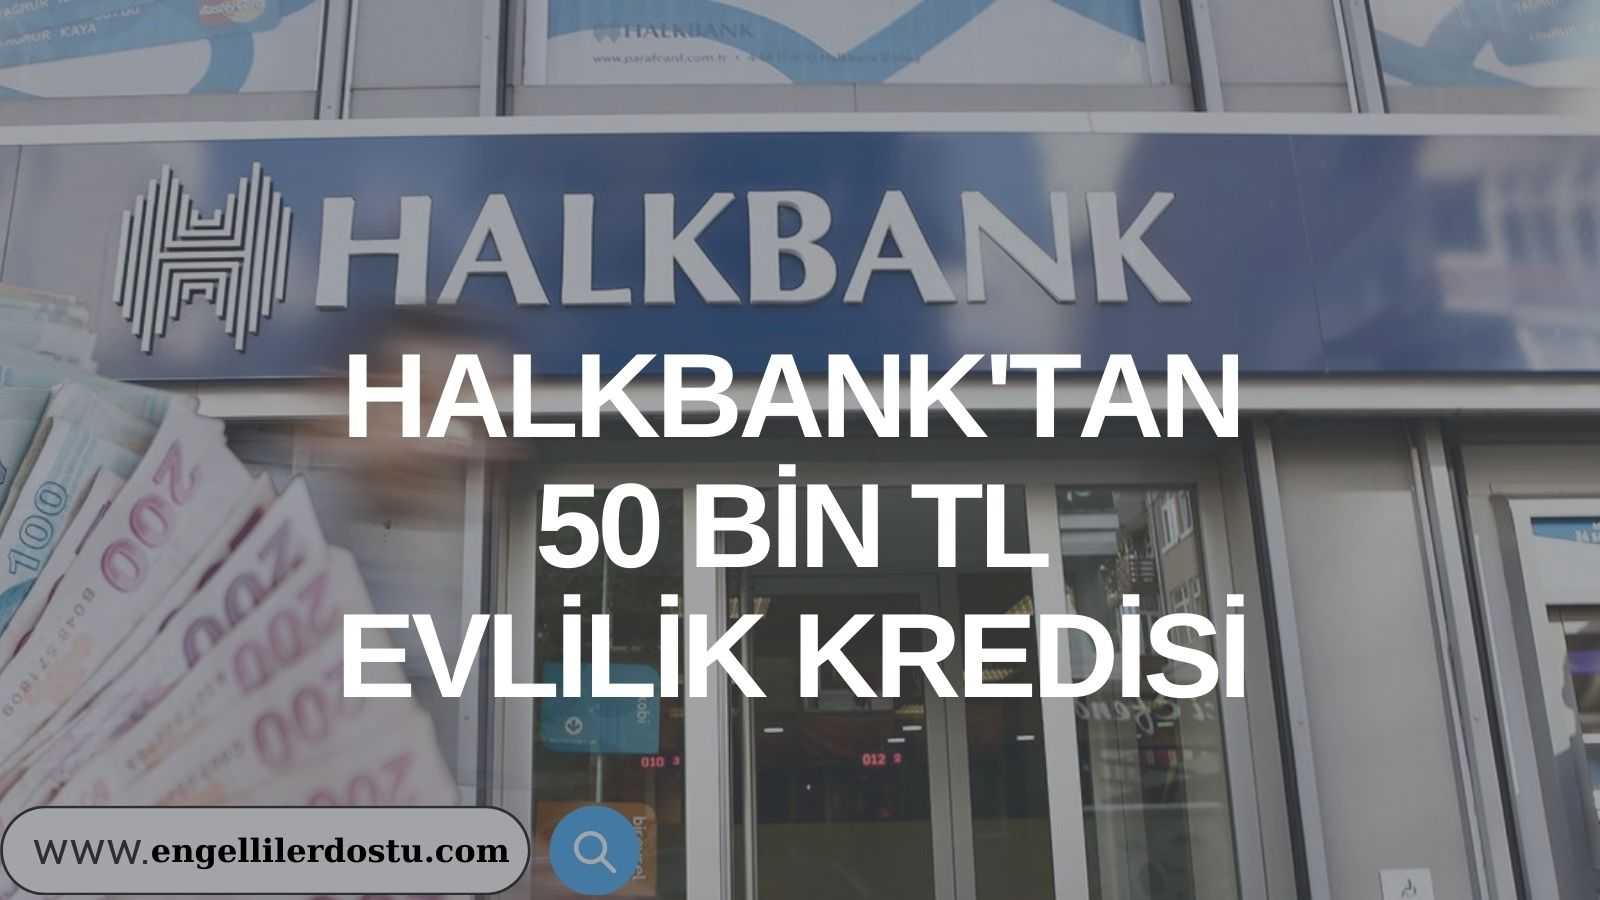 Halkbank'tan 50 Bin TL Evlilik Kredisi